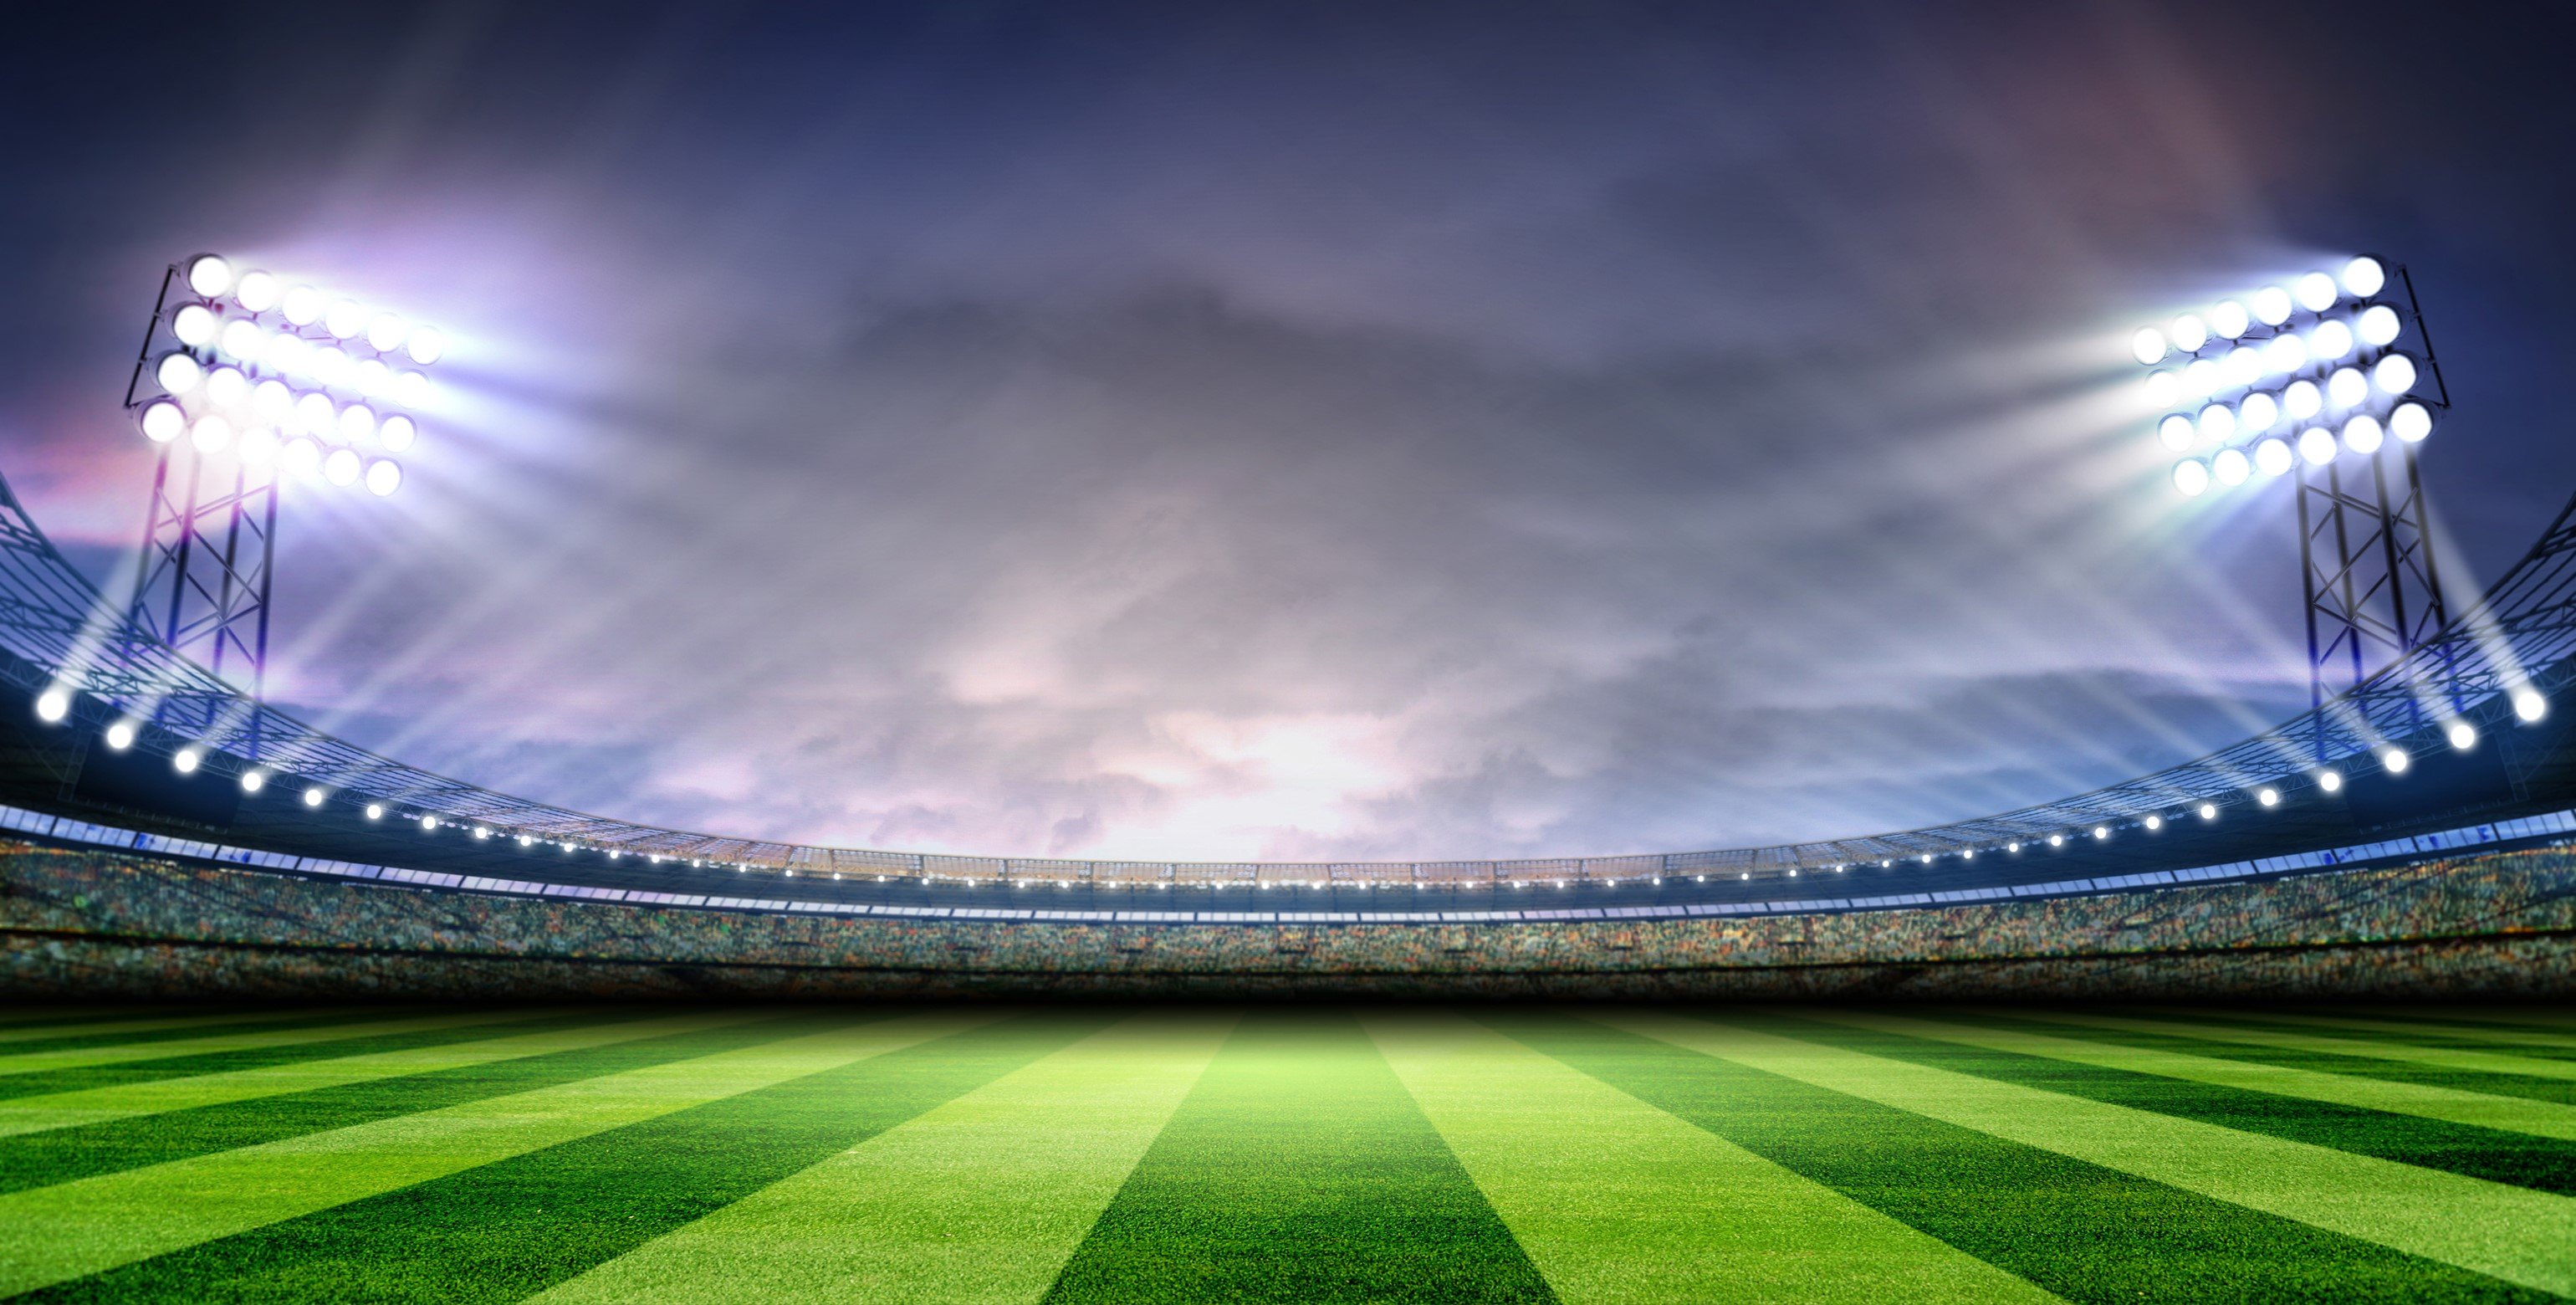 Stadium, Lawn, Rays of light. Mocah HD Wallpaper